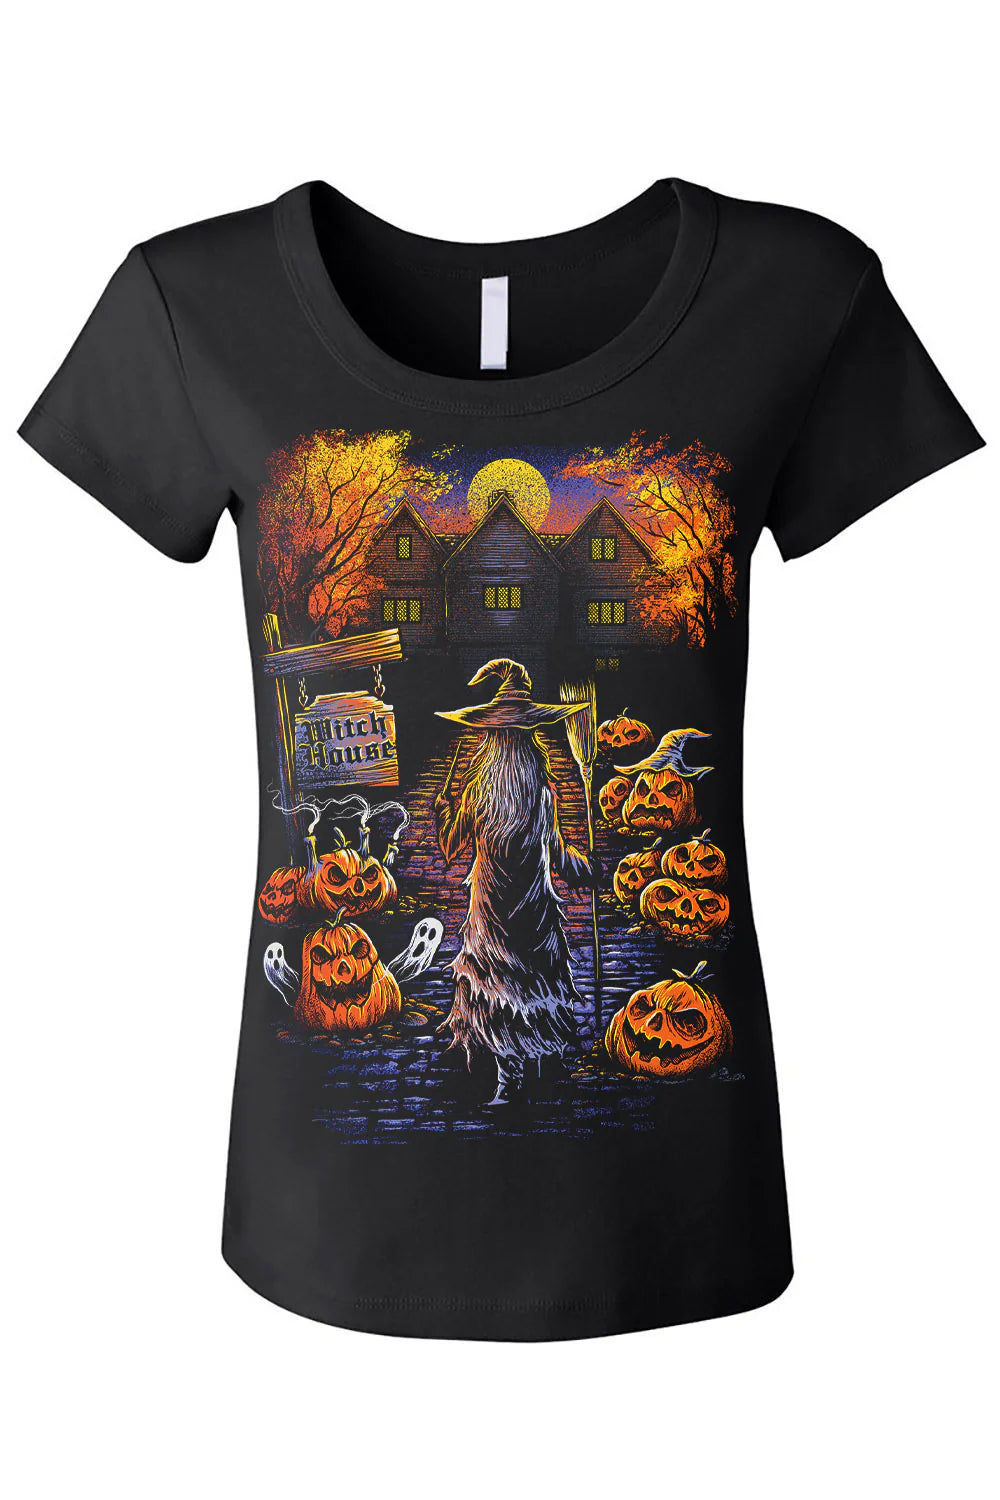 T-Shirt Salem Witch House